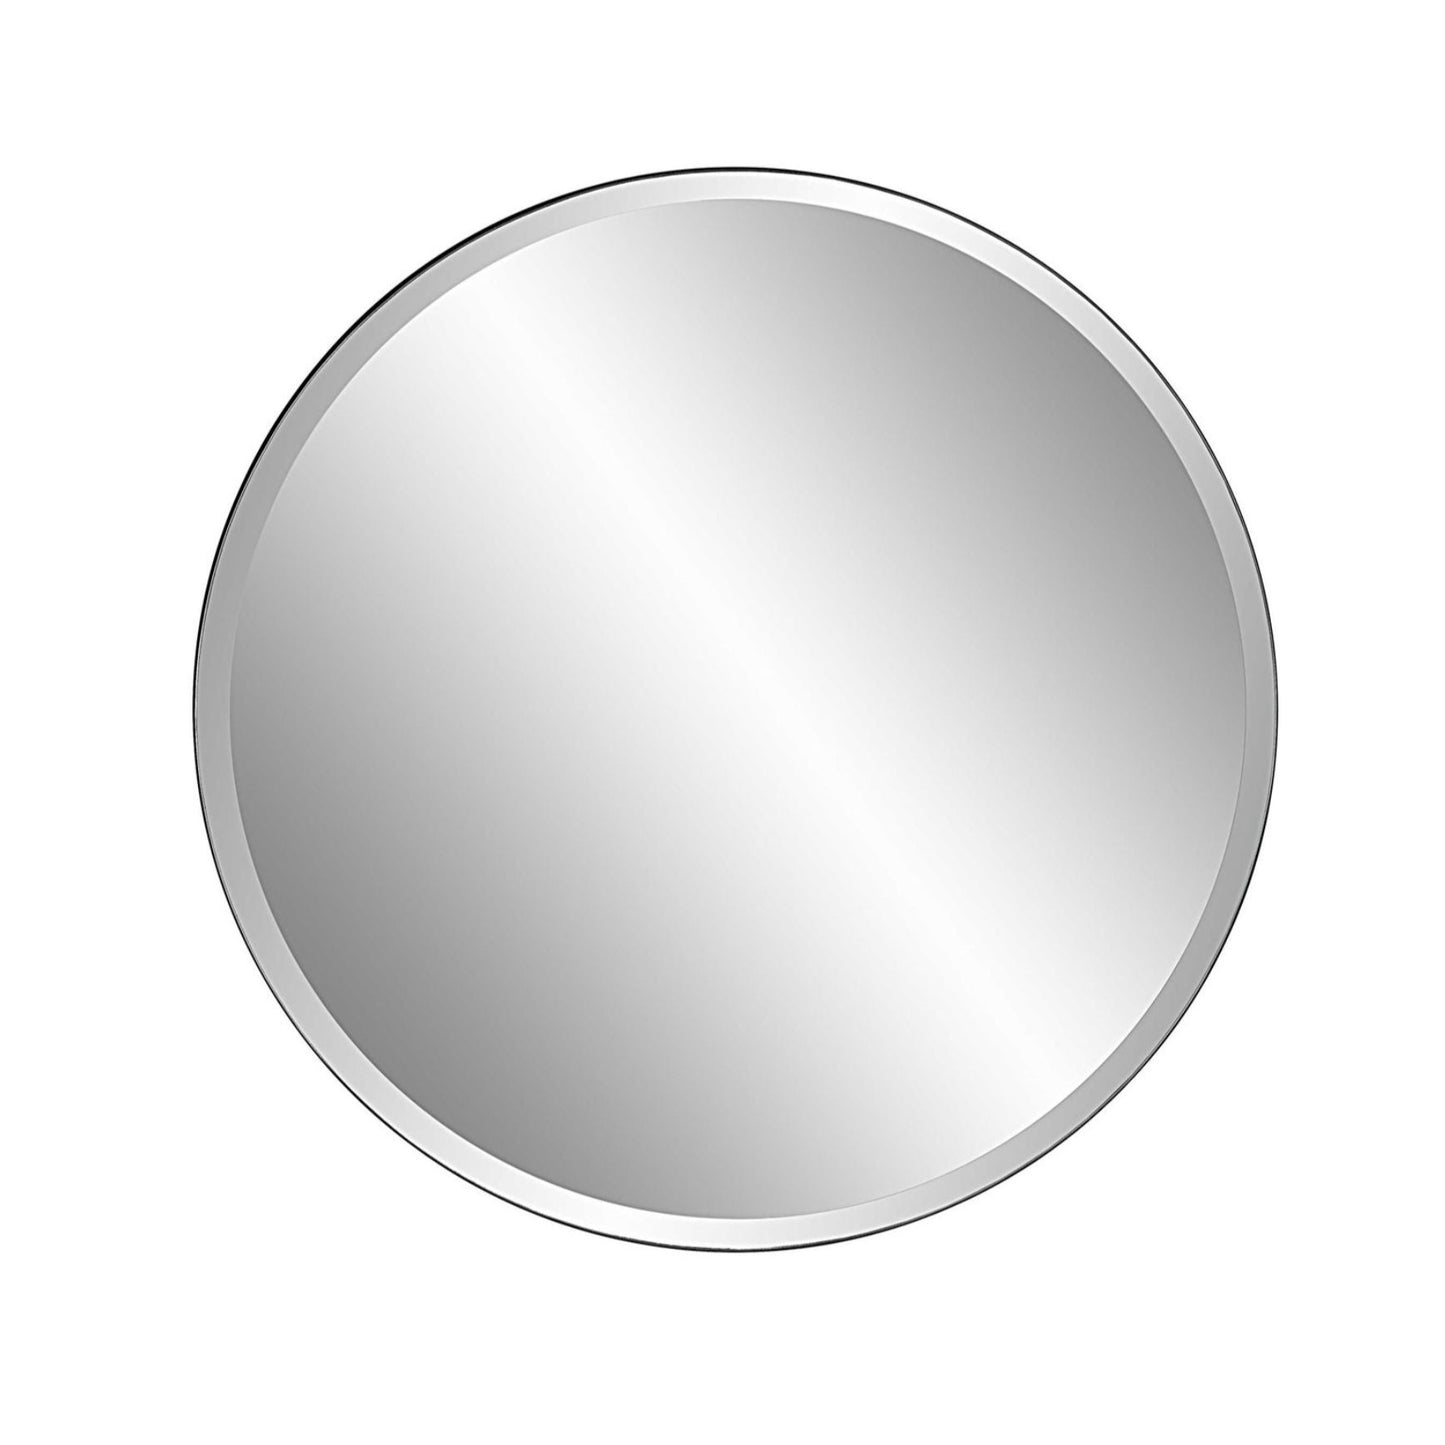 Simple black round mirror